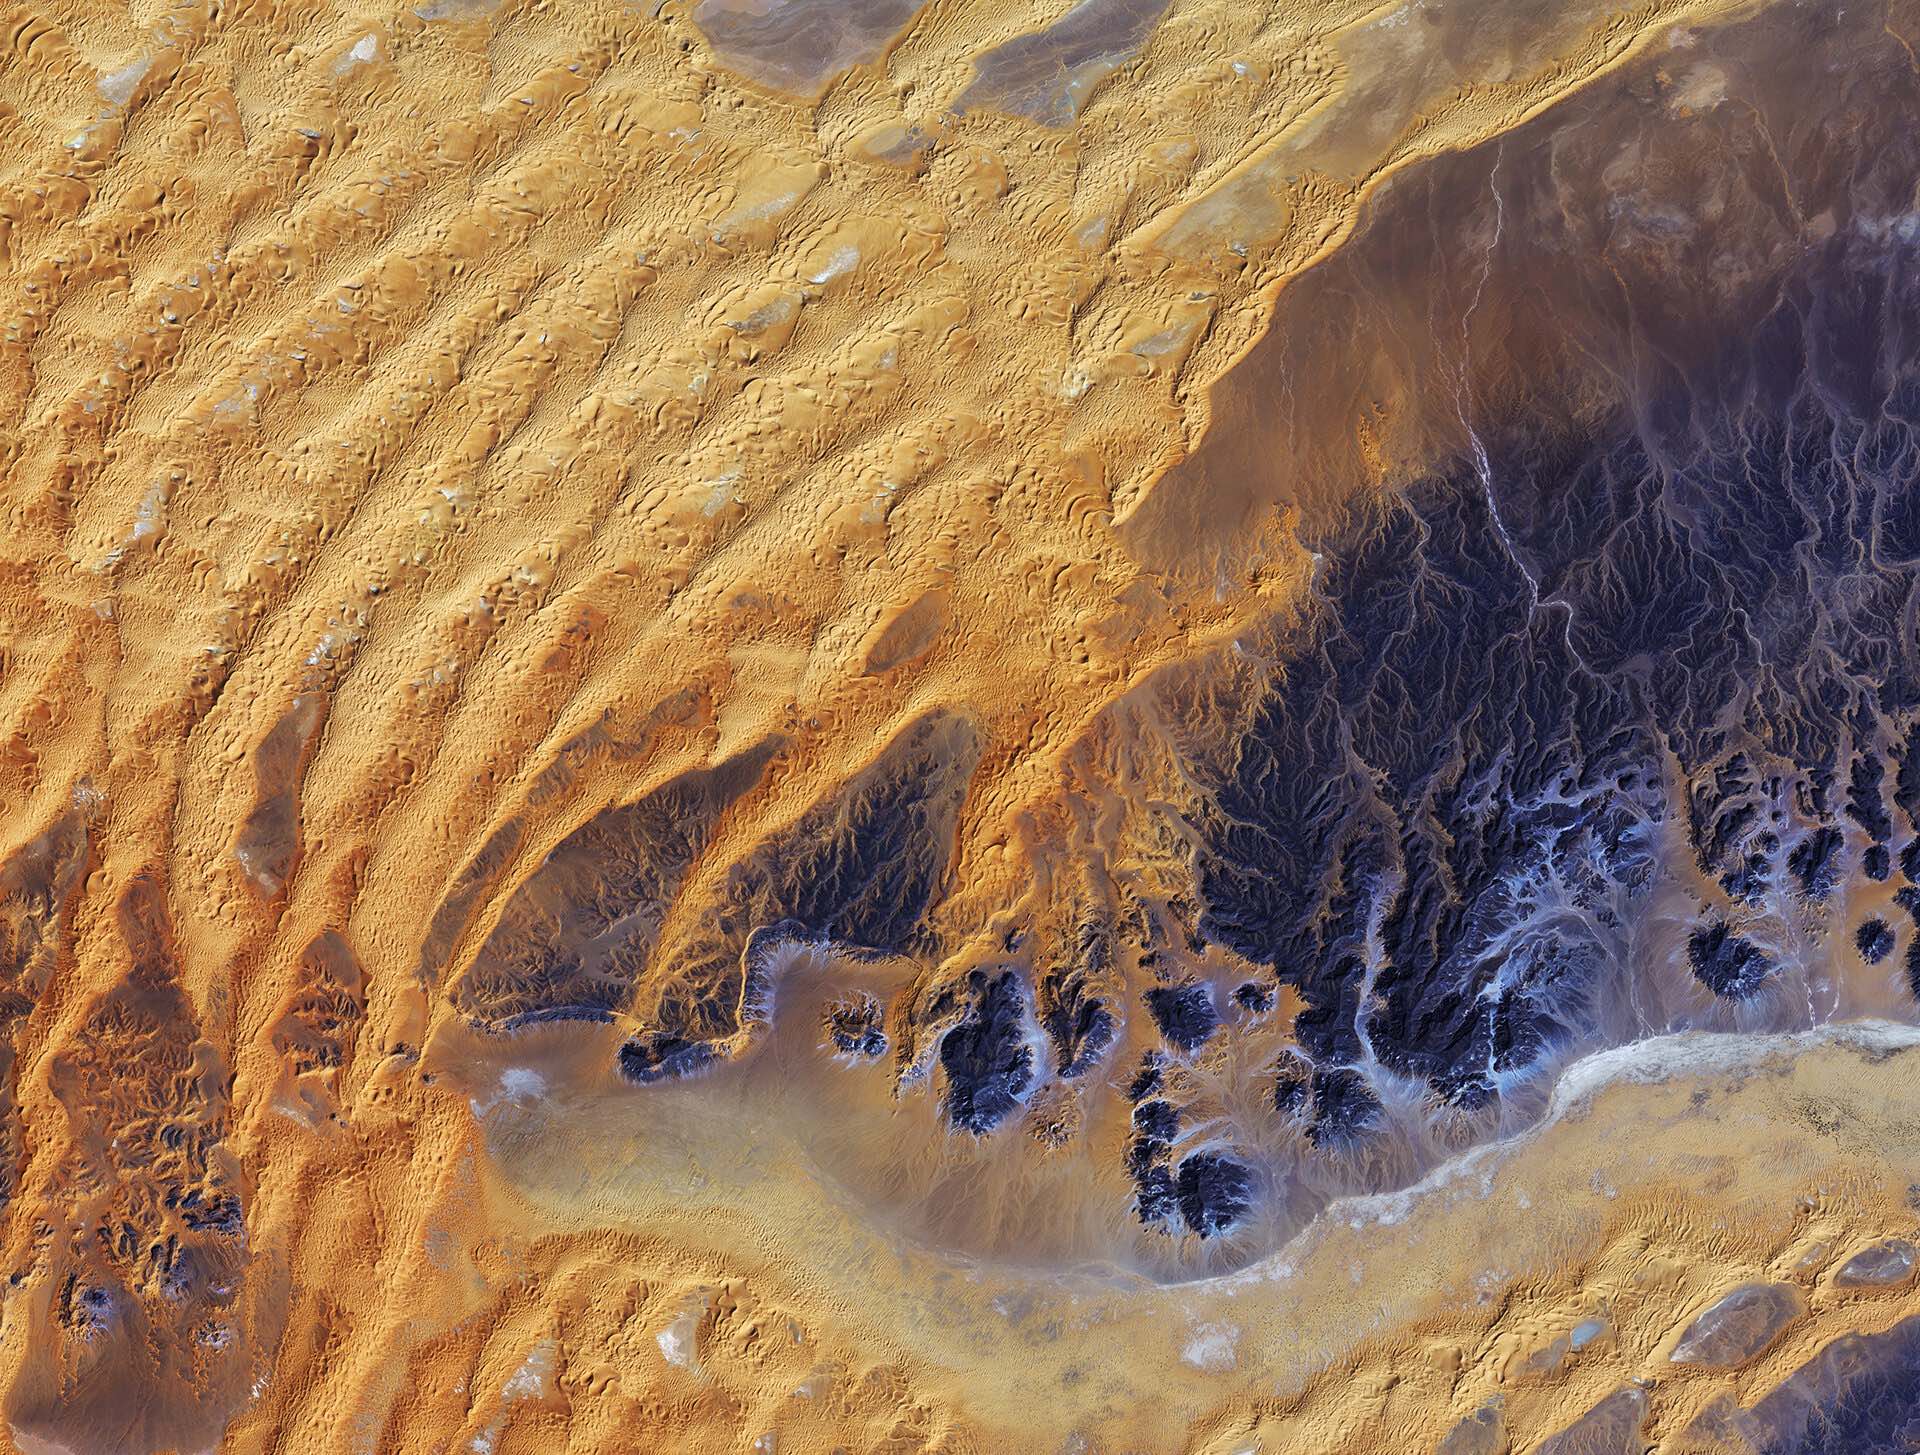 Sahara_desert_Algeria, from space, journal of wild culture ©2021